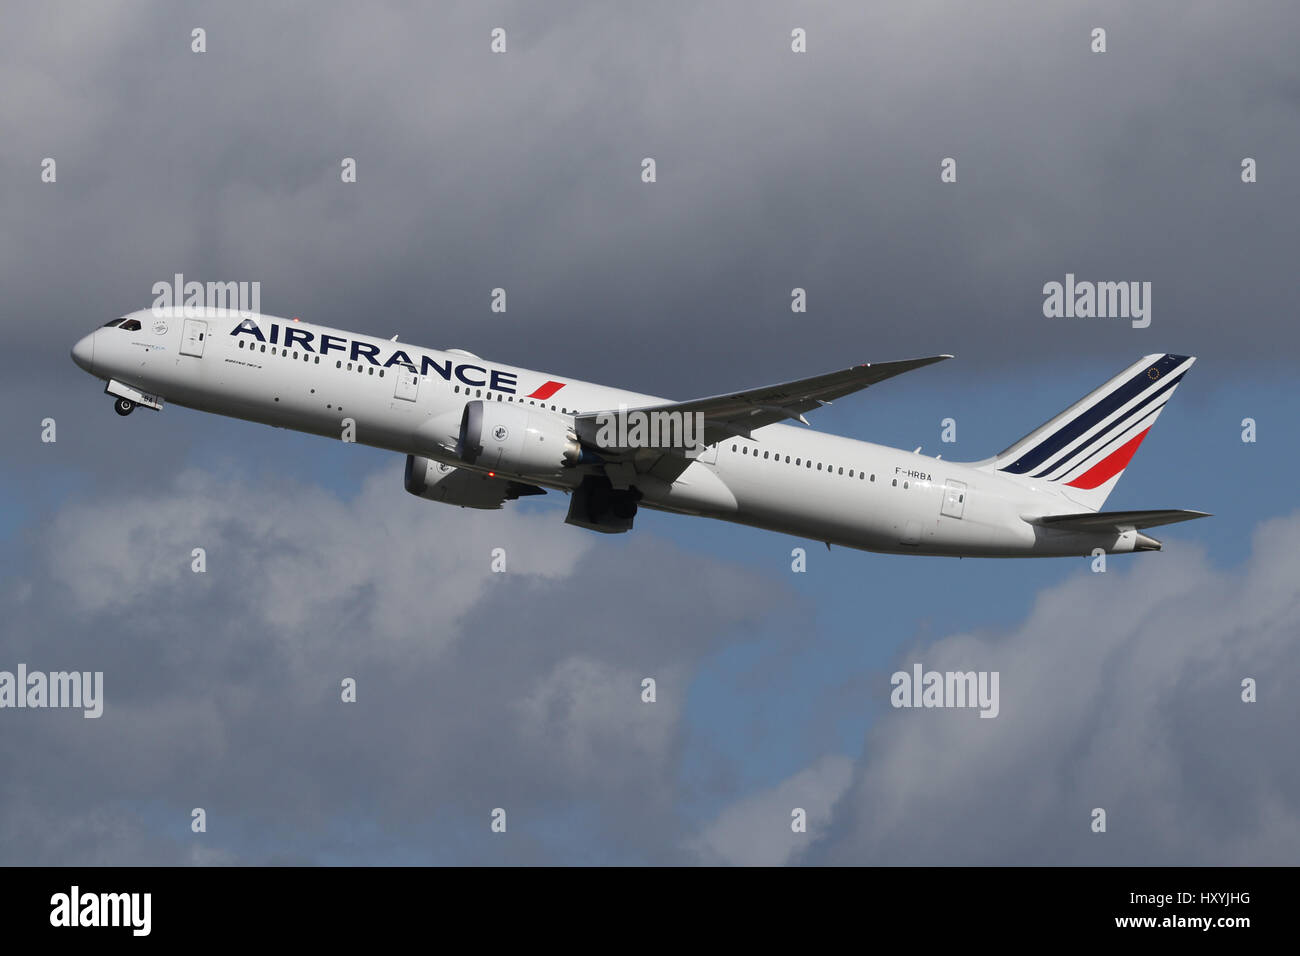 AIR FRANCE BOEING 787 900 Stockfotografie - Alamy